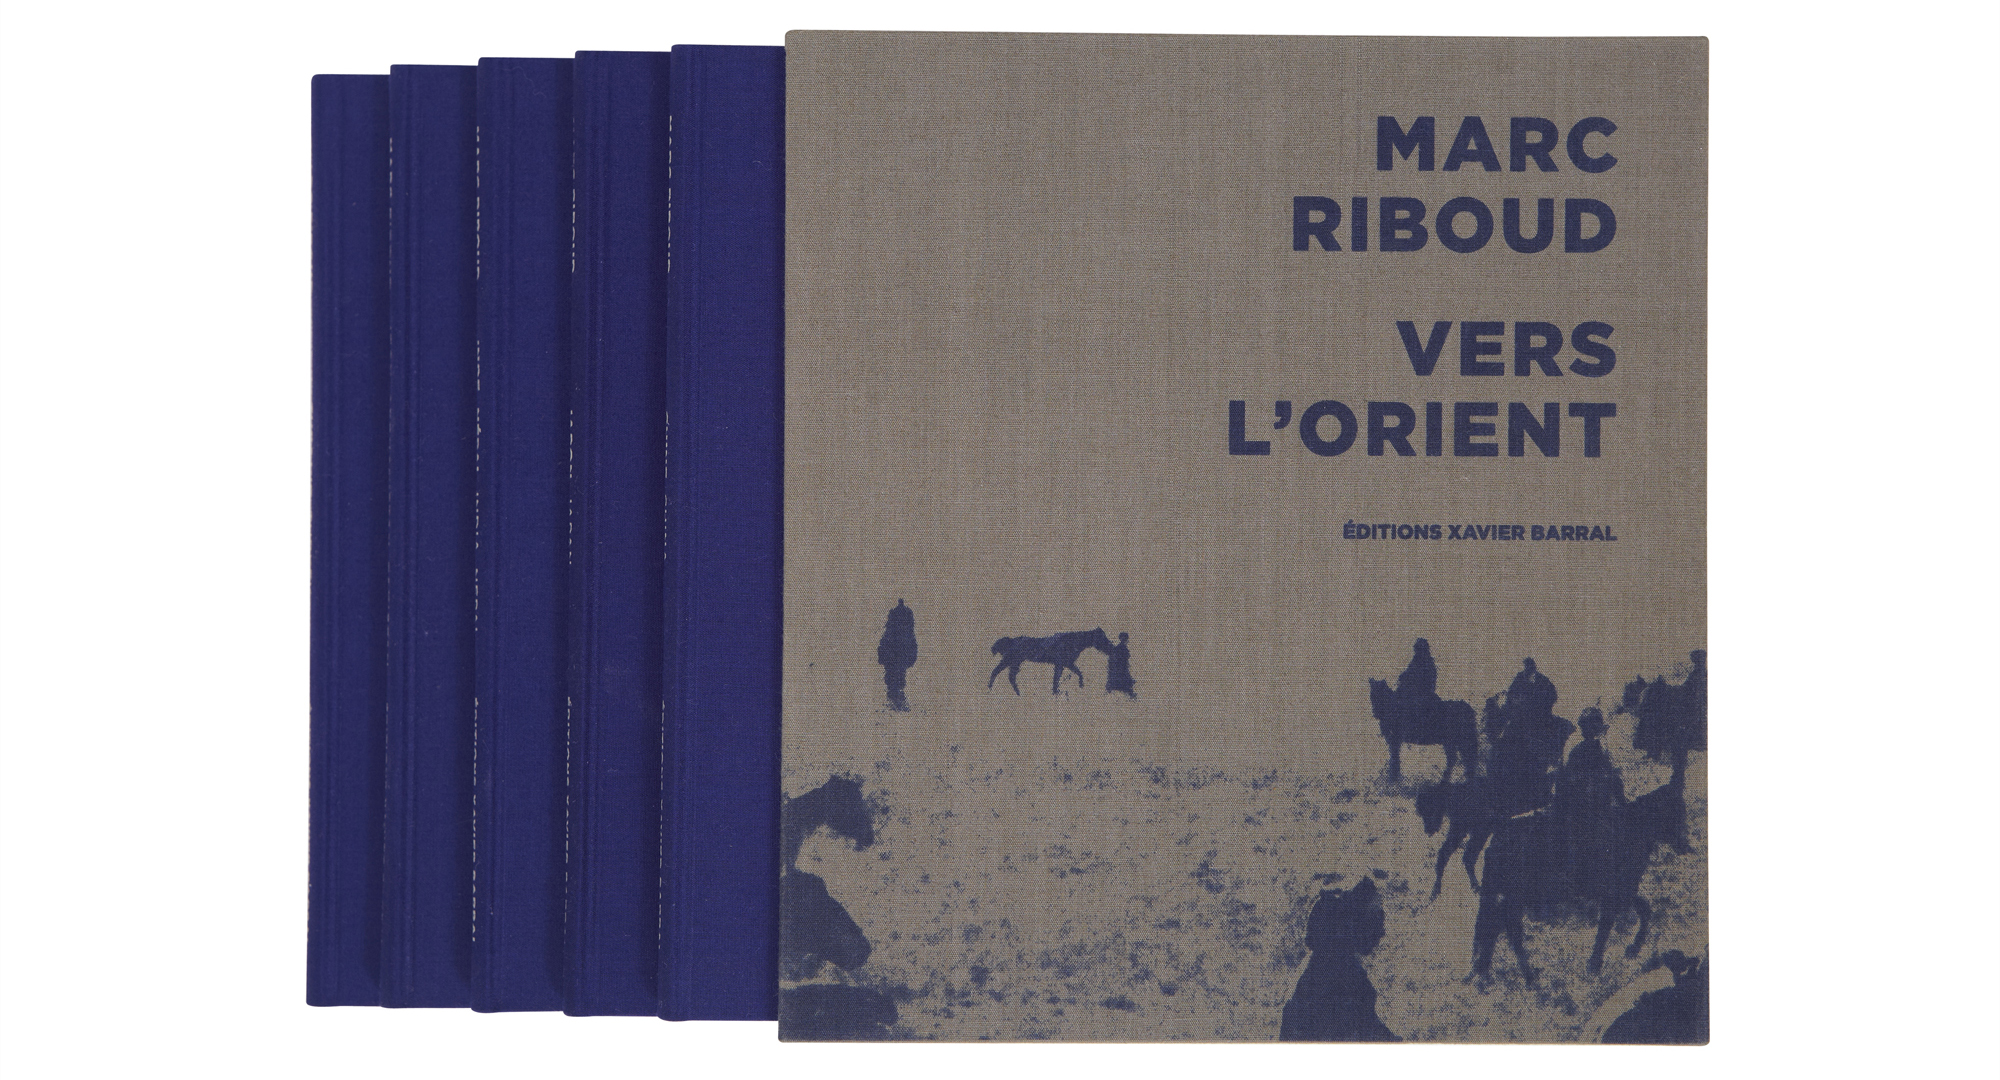 Photobook Review: Vers l’Orient by Marc Riboud